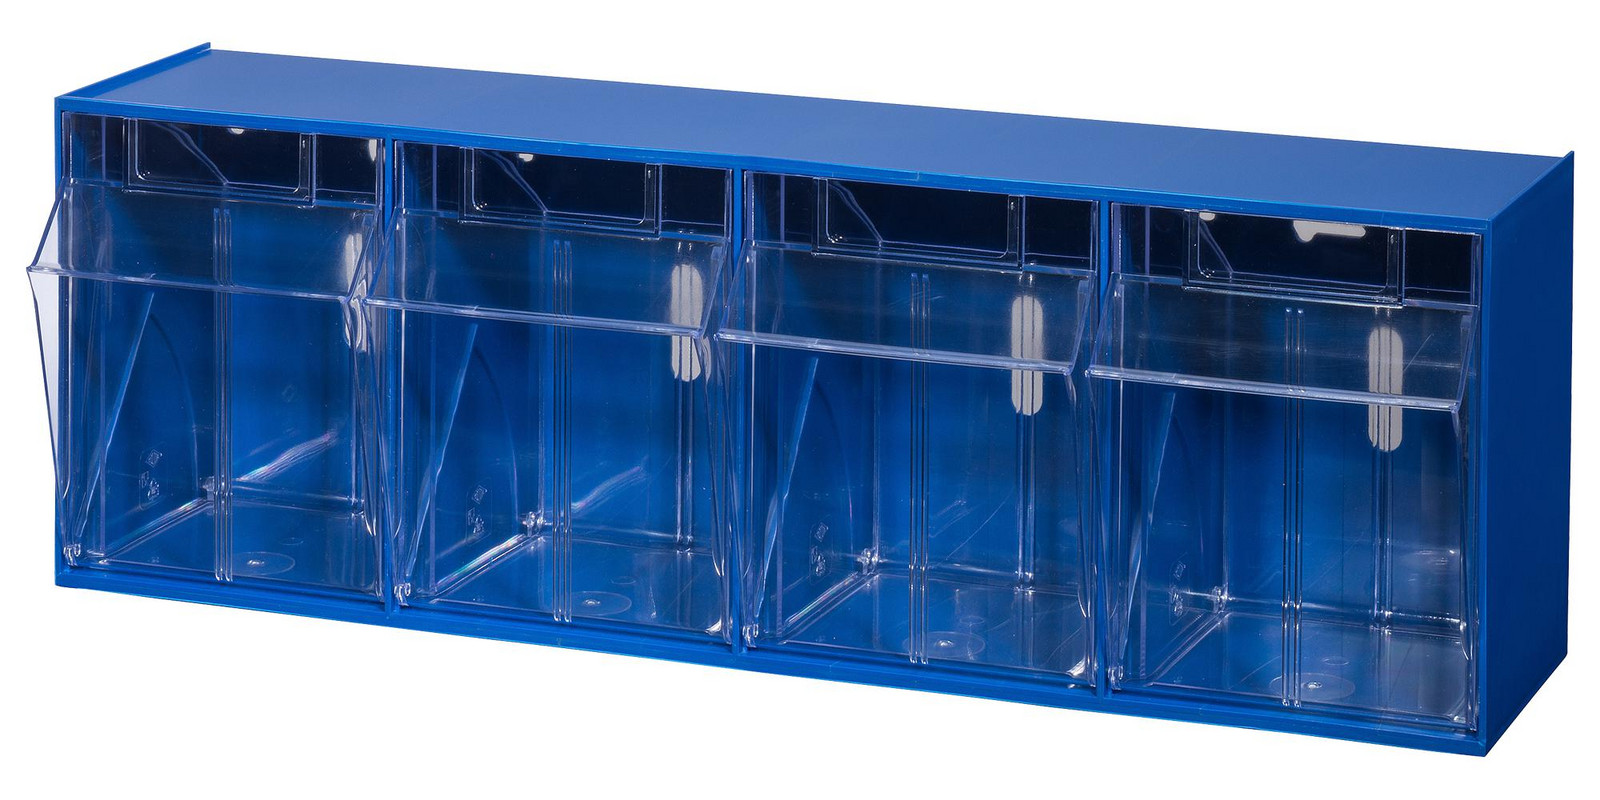 Allit 464420 Bin Cabinet, 600 X 170 X 205mm, Blu/clr